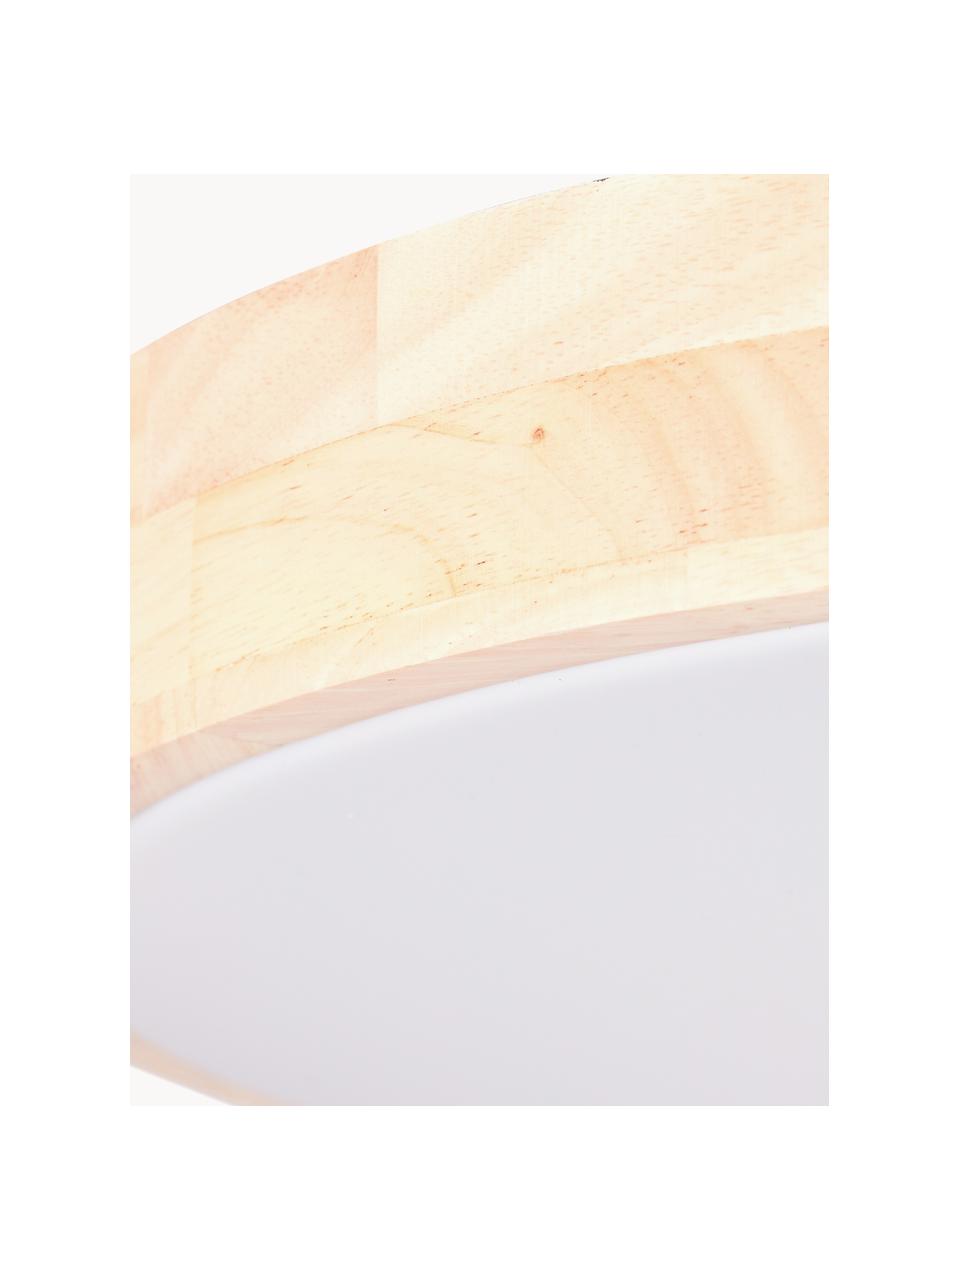 Dimbare LED plafondlamp Slimline van hout met afstandsbediening, Lampenkap: hout, Diffuser: kunststof, Licht hout, wit, Ø 49  x H 9 cm